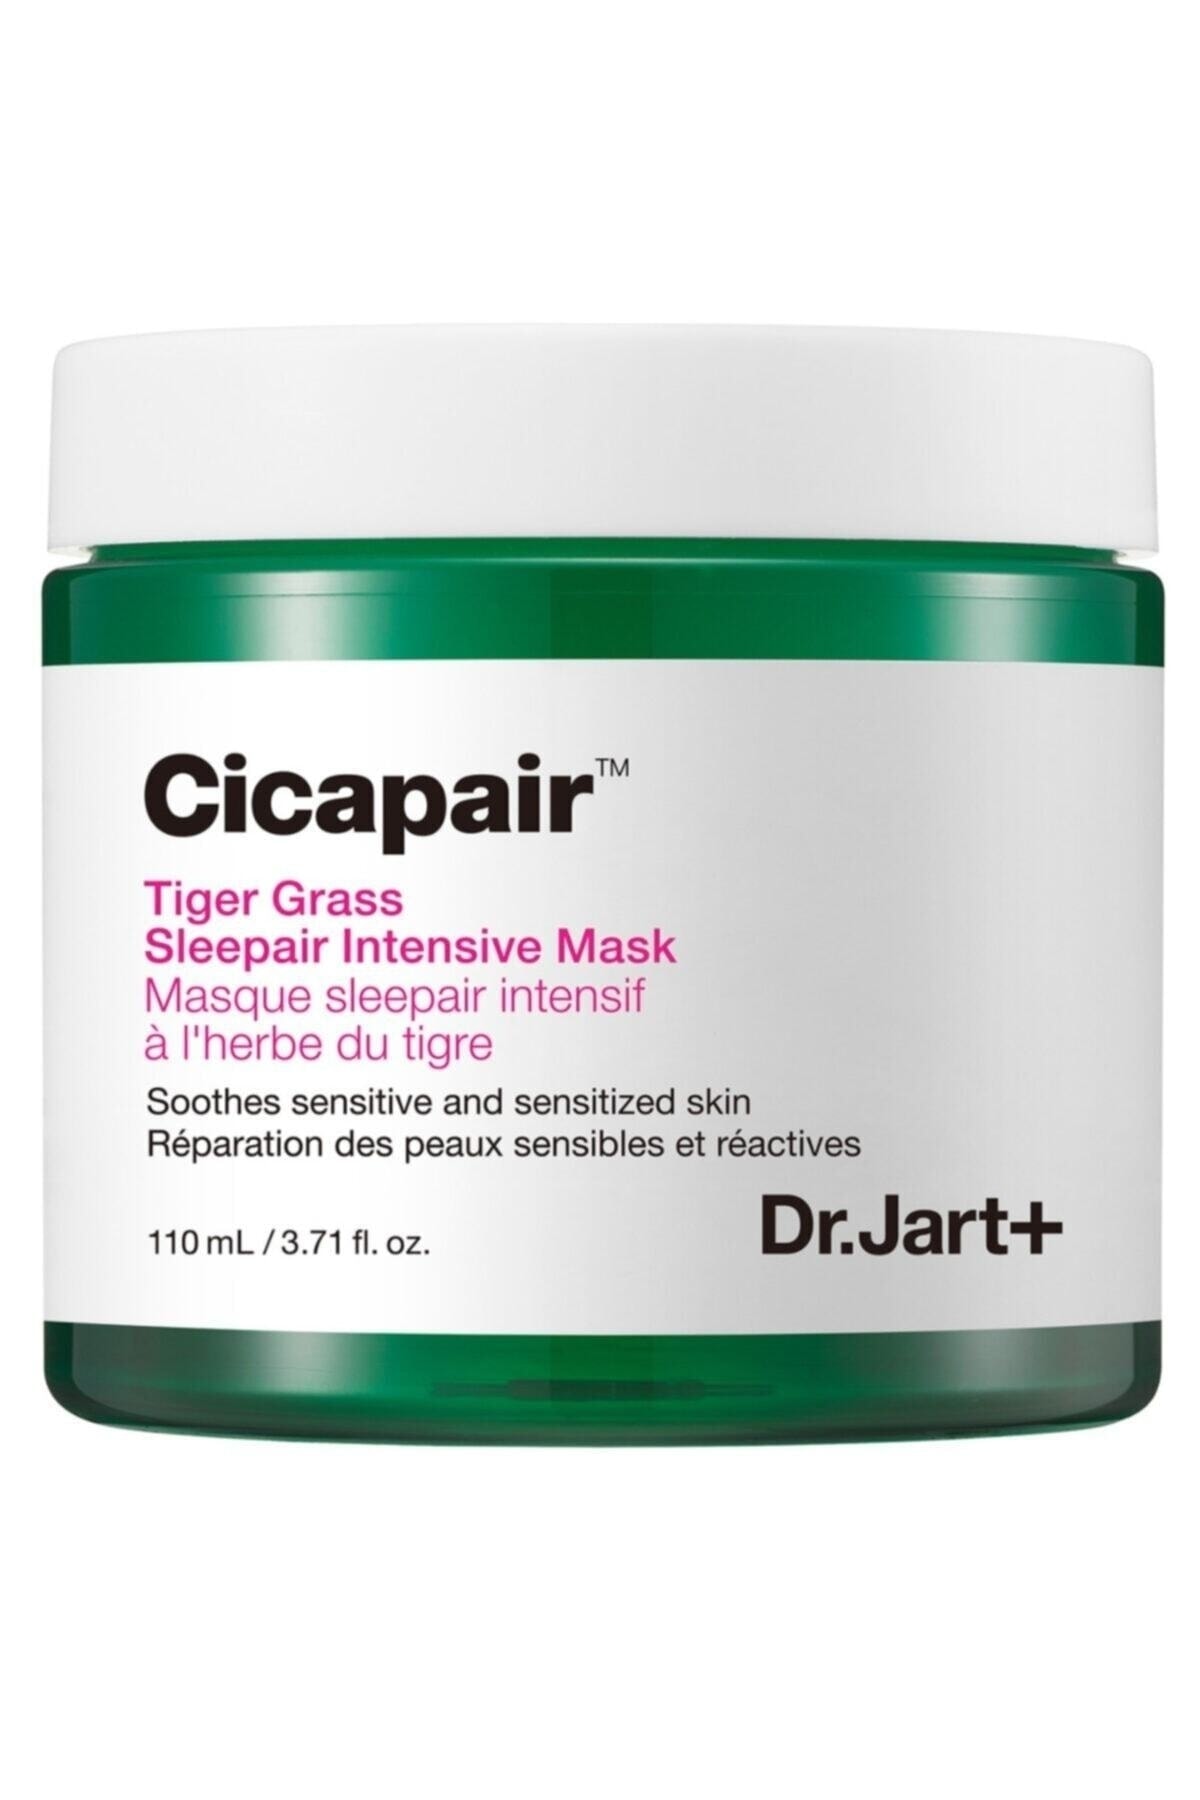 Dr. Jart+ Dr.jart+ Cicapair Tiger Grass Sleepair Intensive Mask Onarıcı Maske 110 Ml Shoppng Fashions